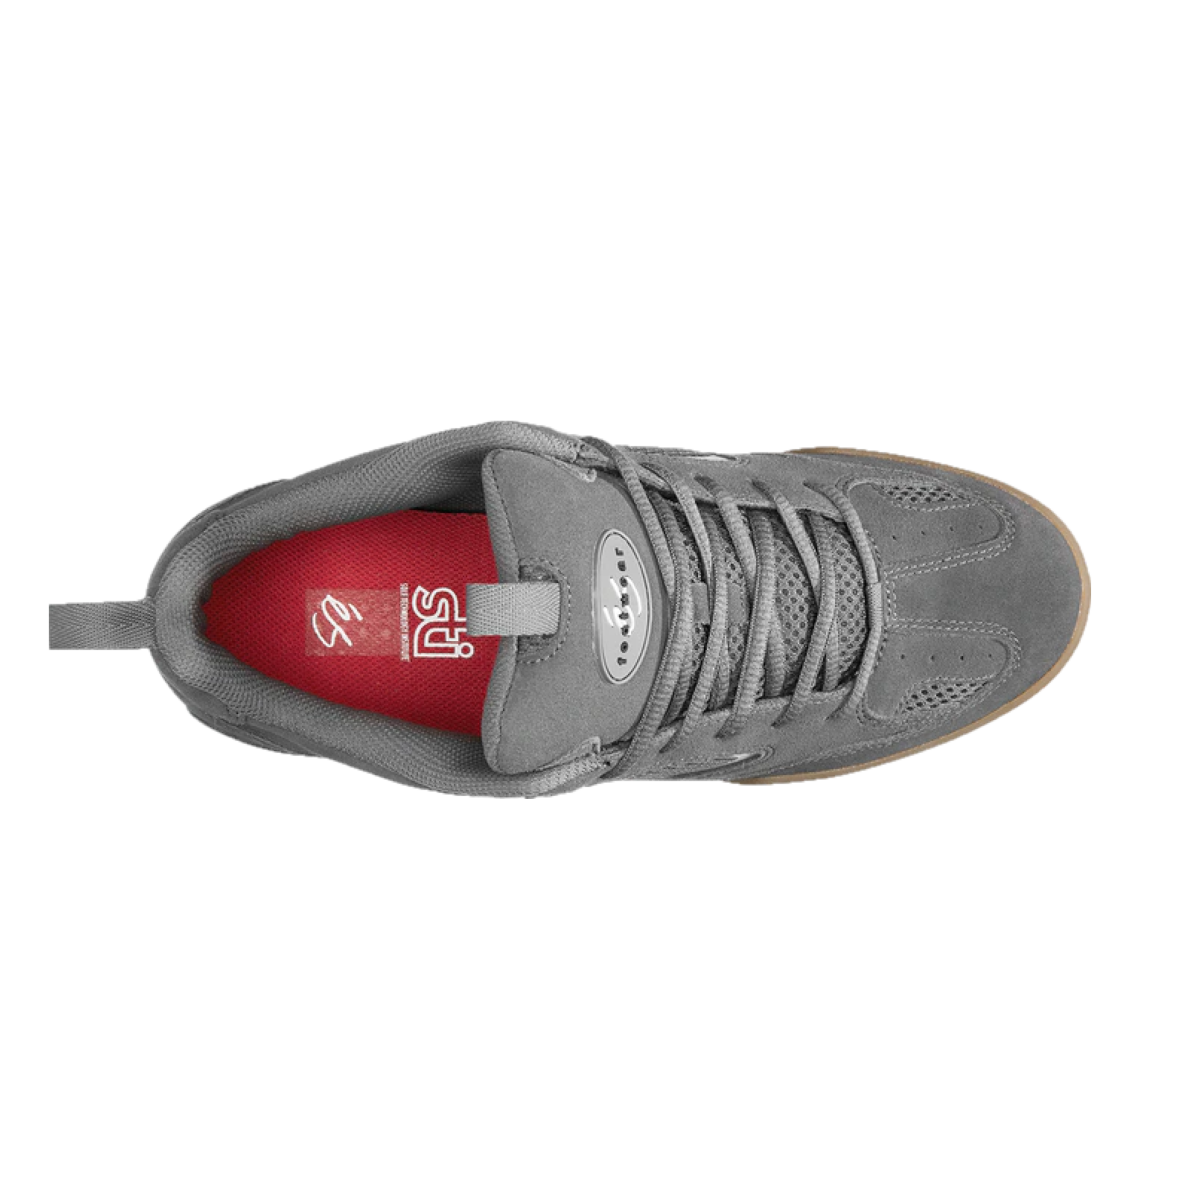 ÉS 5101000174/367 QUATRO MN'S (Medium) Grey/Gum Suede & Mesh Skate Shoes